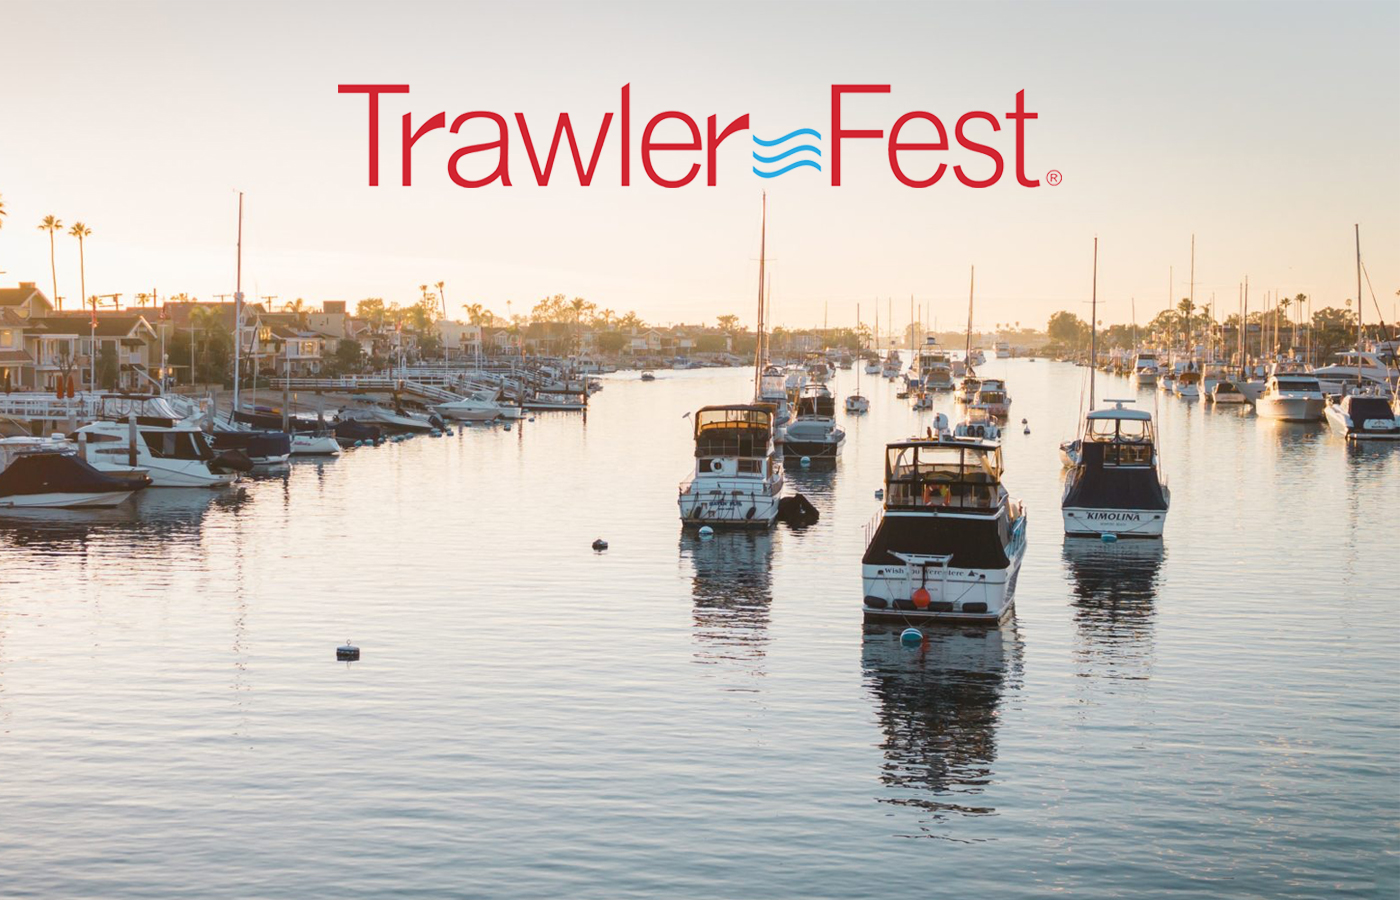 2019 TrawlerFest Boat Show